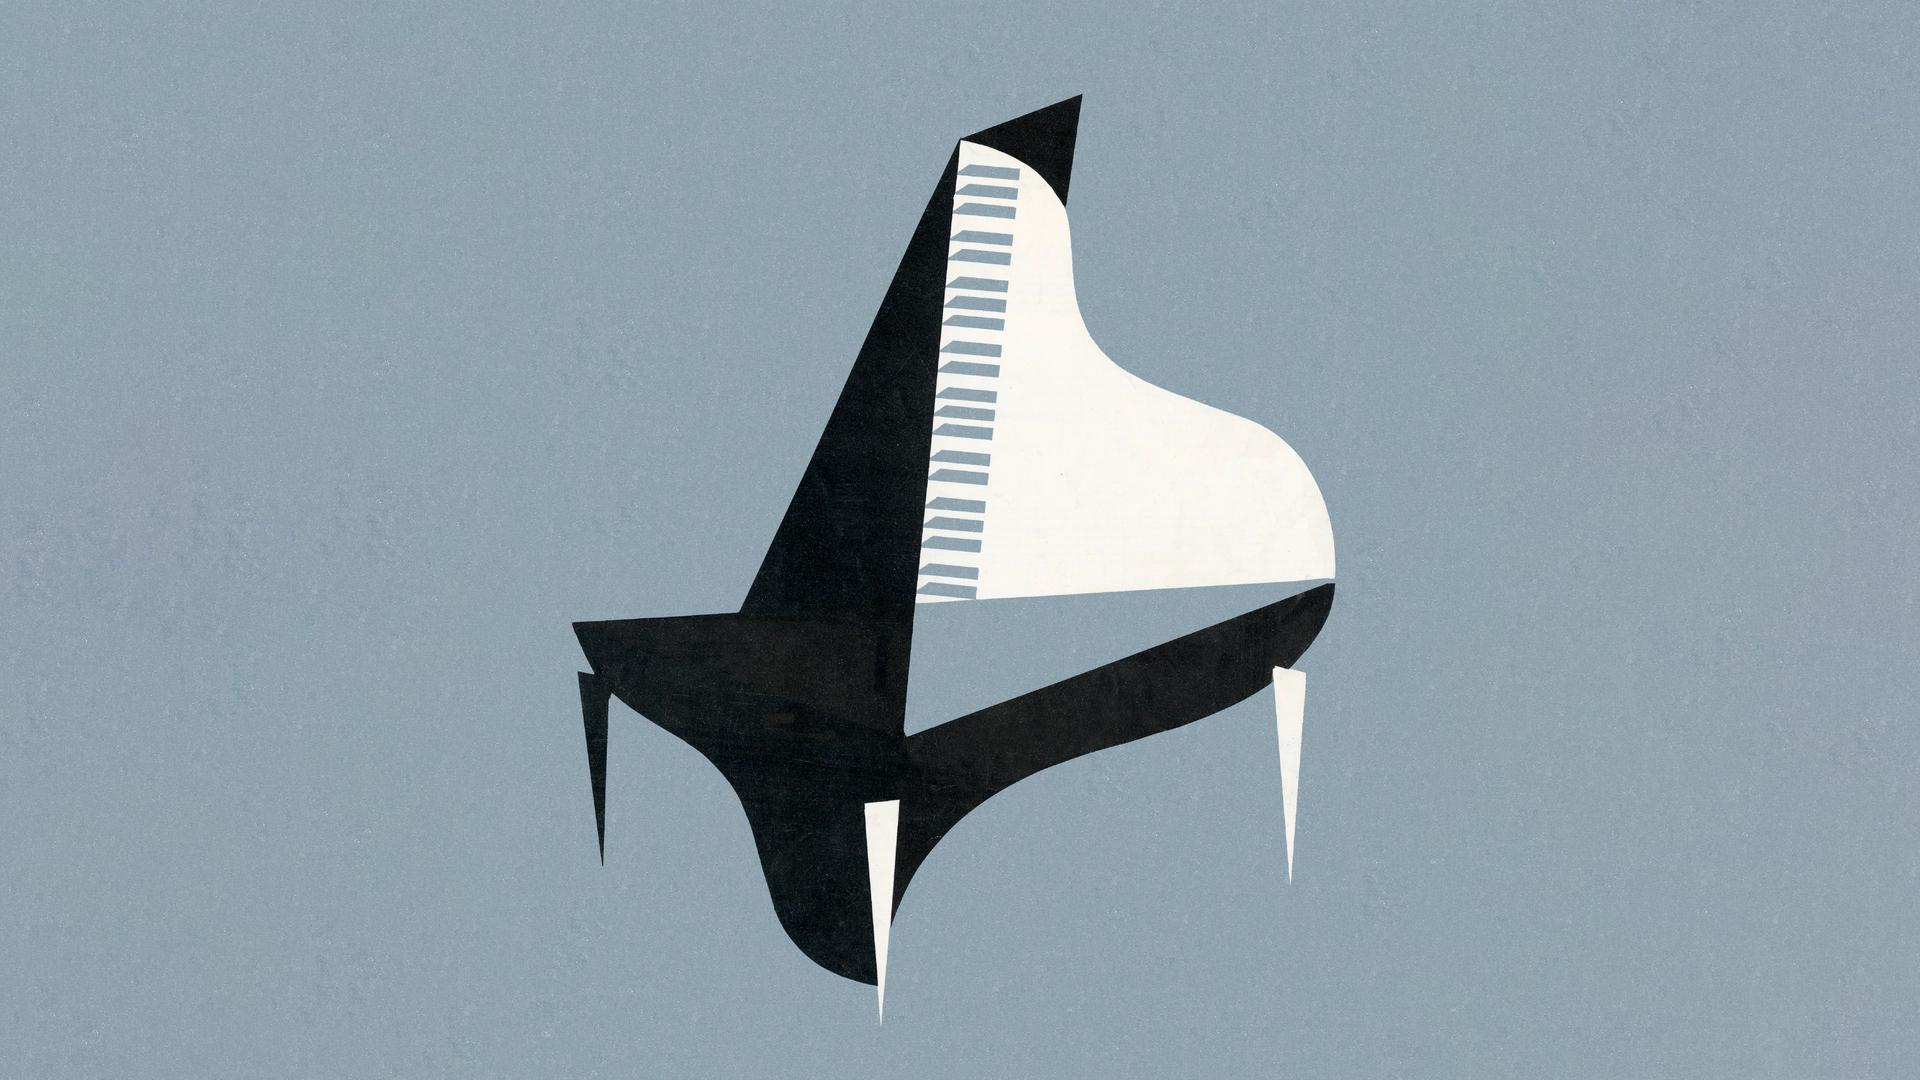 The Piano image